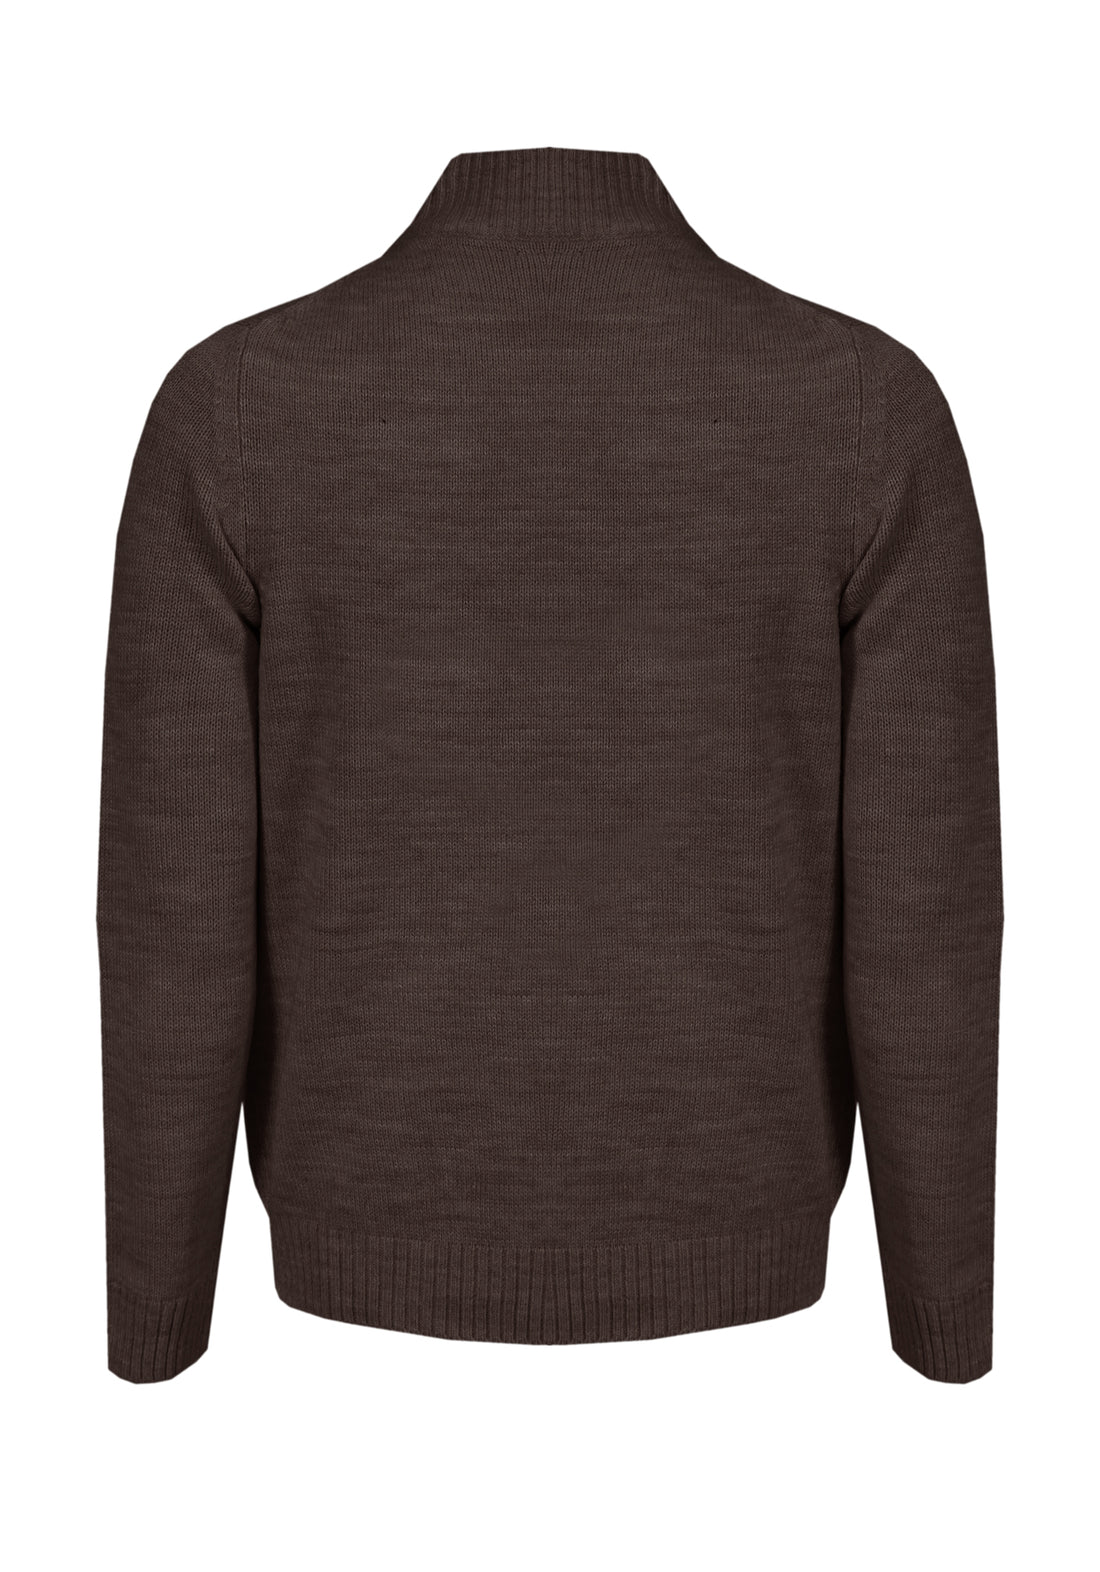 Contrast Suede Cardigan Sweater - Dark Brown